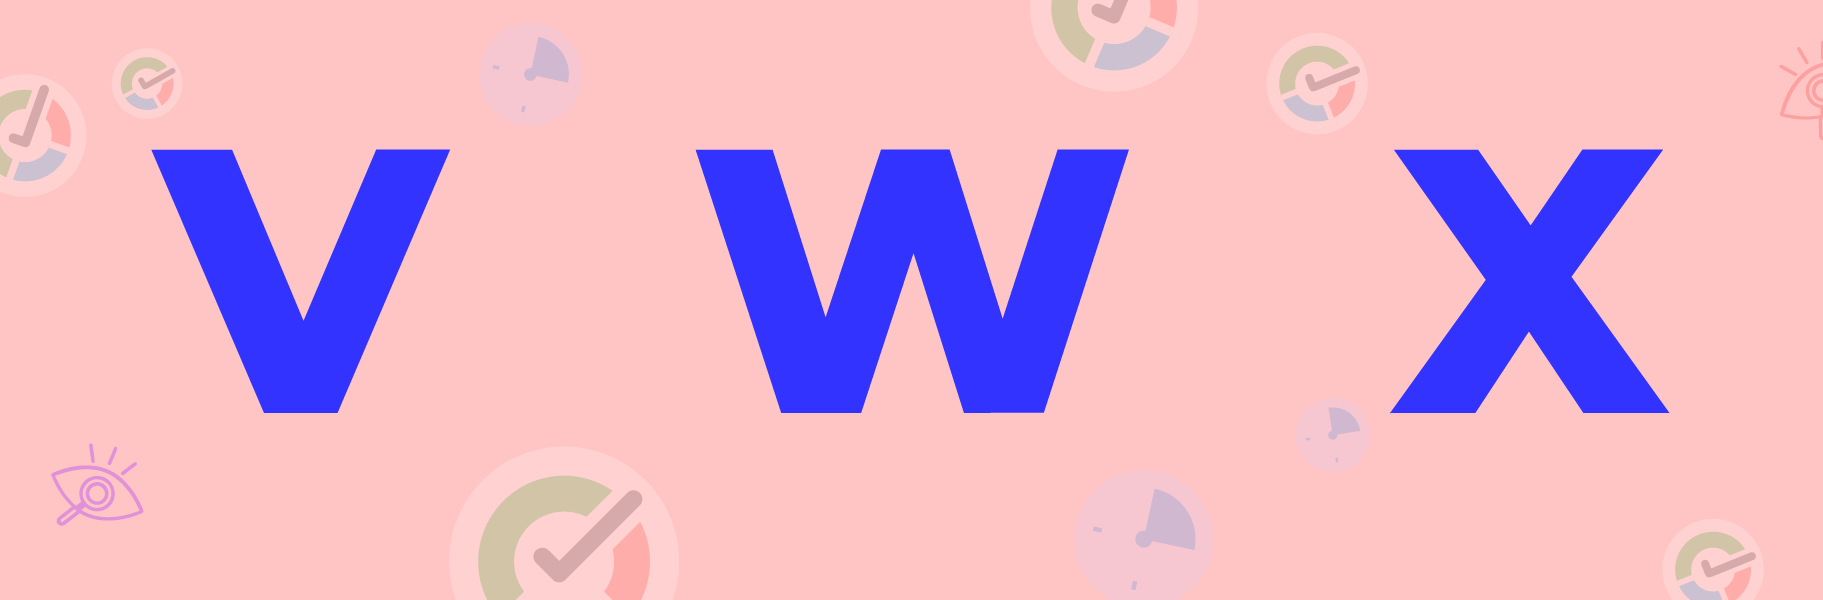 v w x letters image 